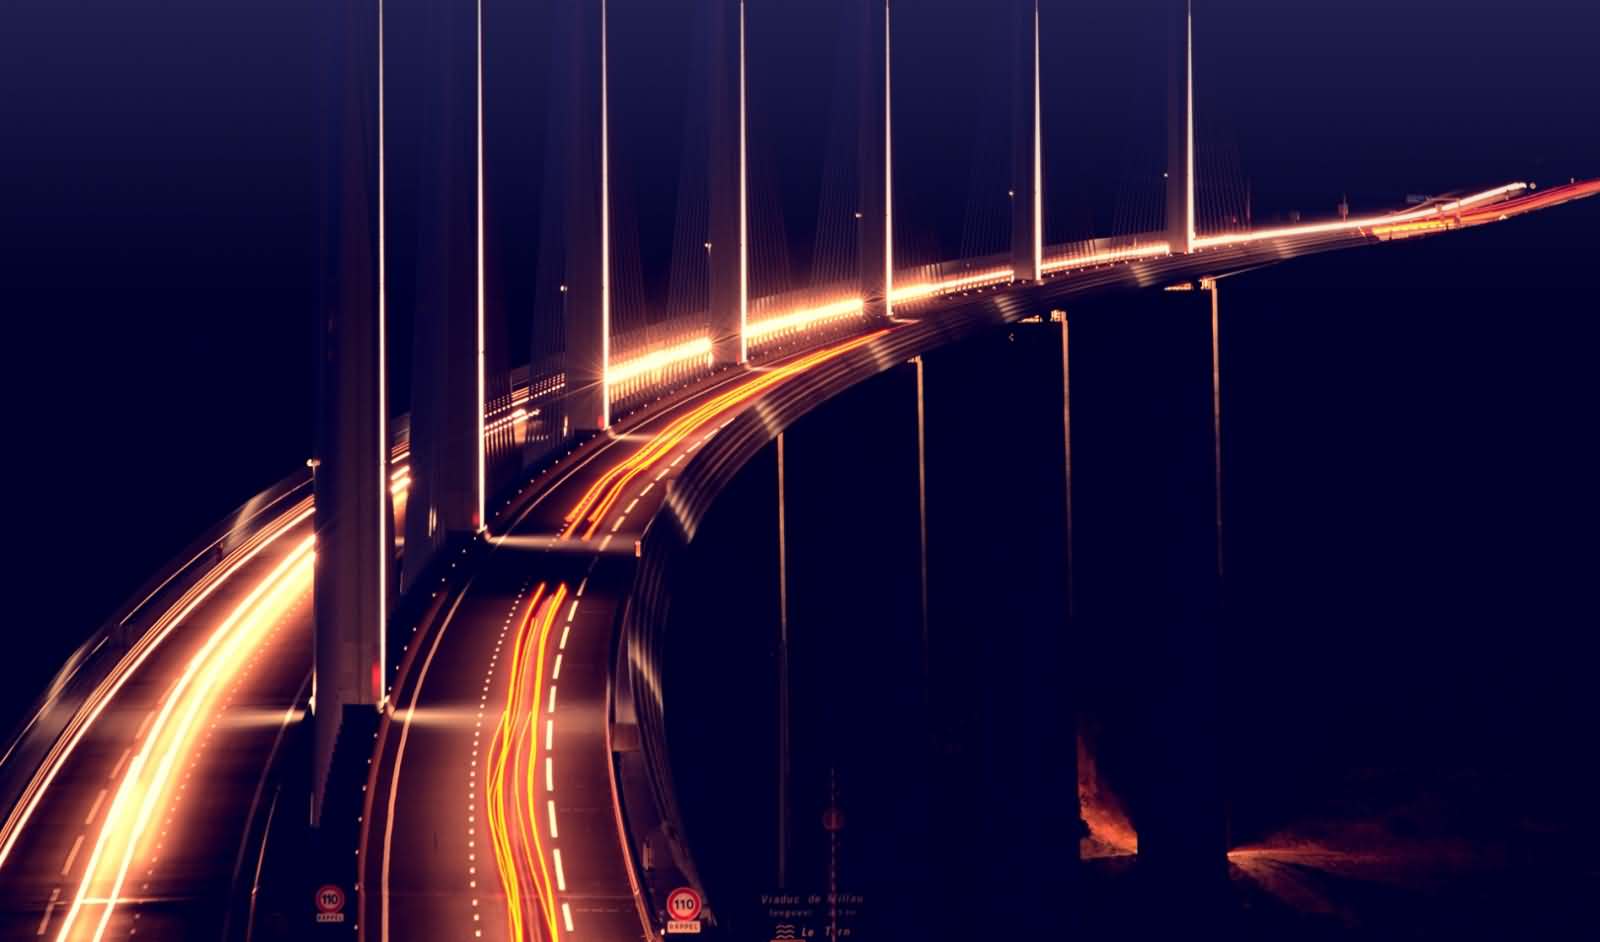 The Millau Viaduct with night lights